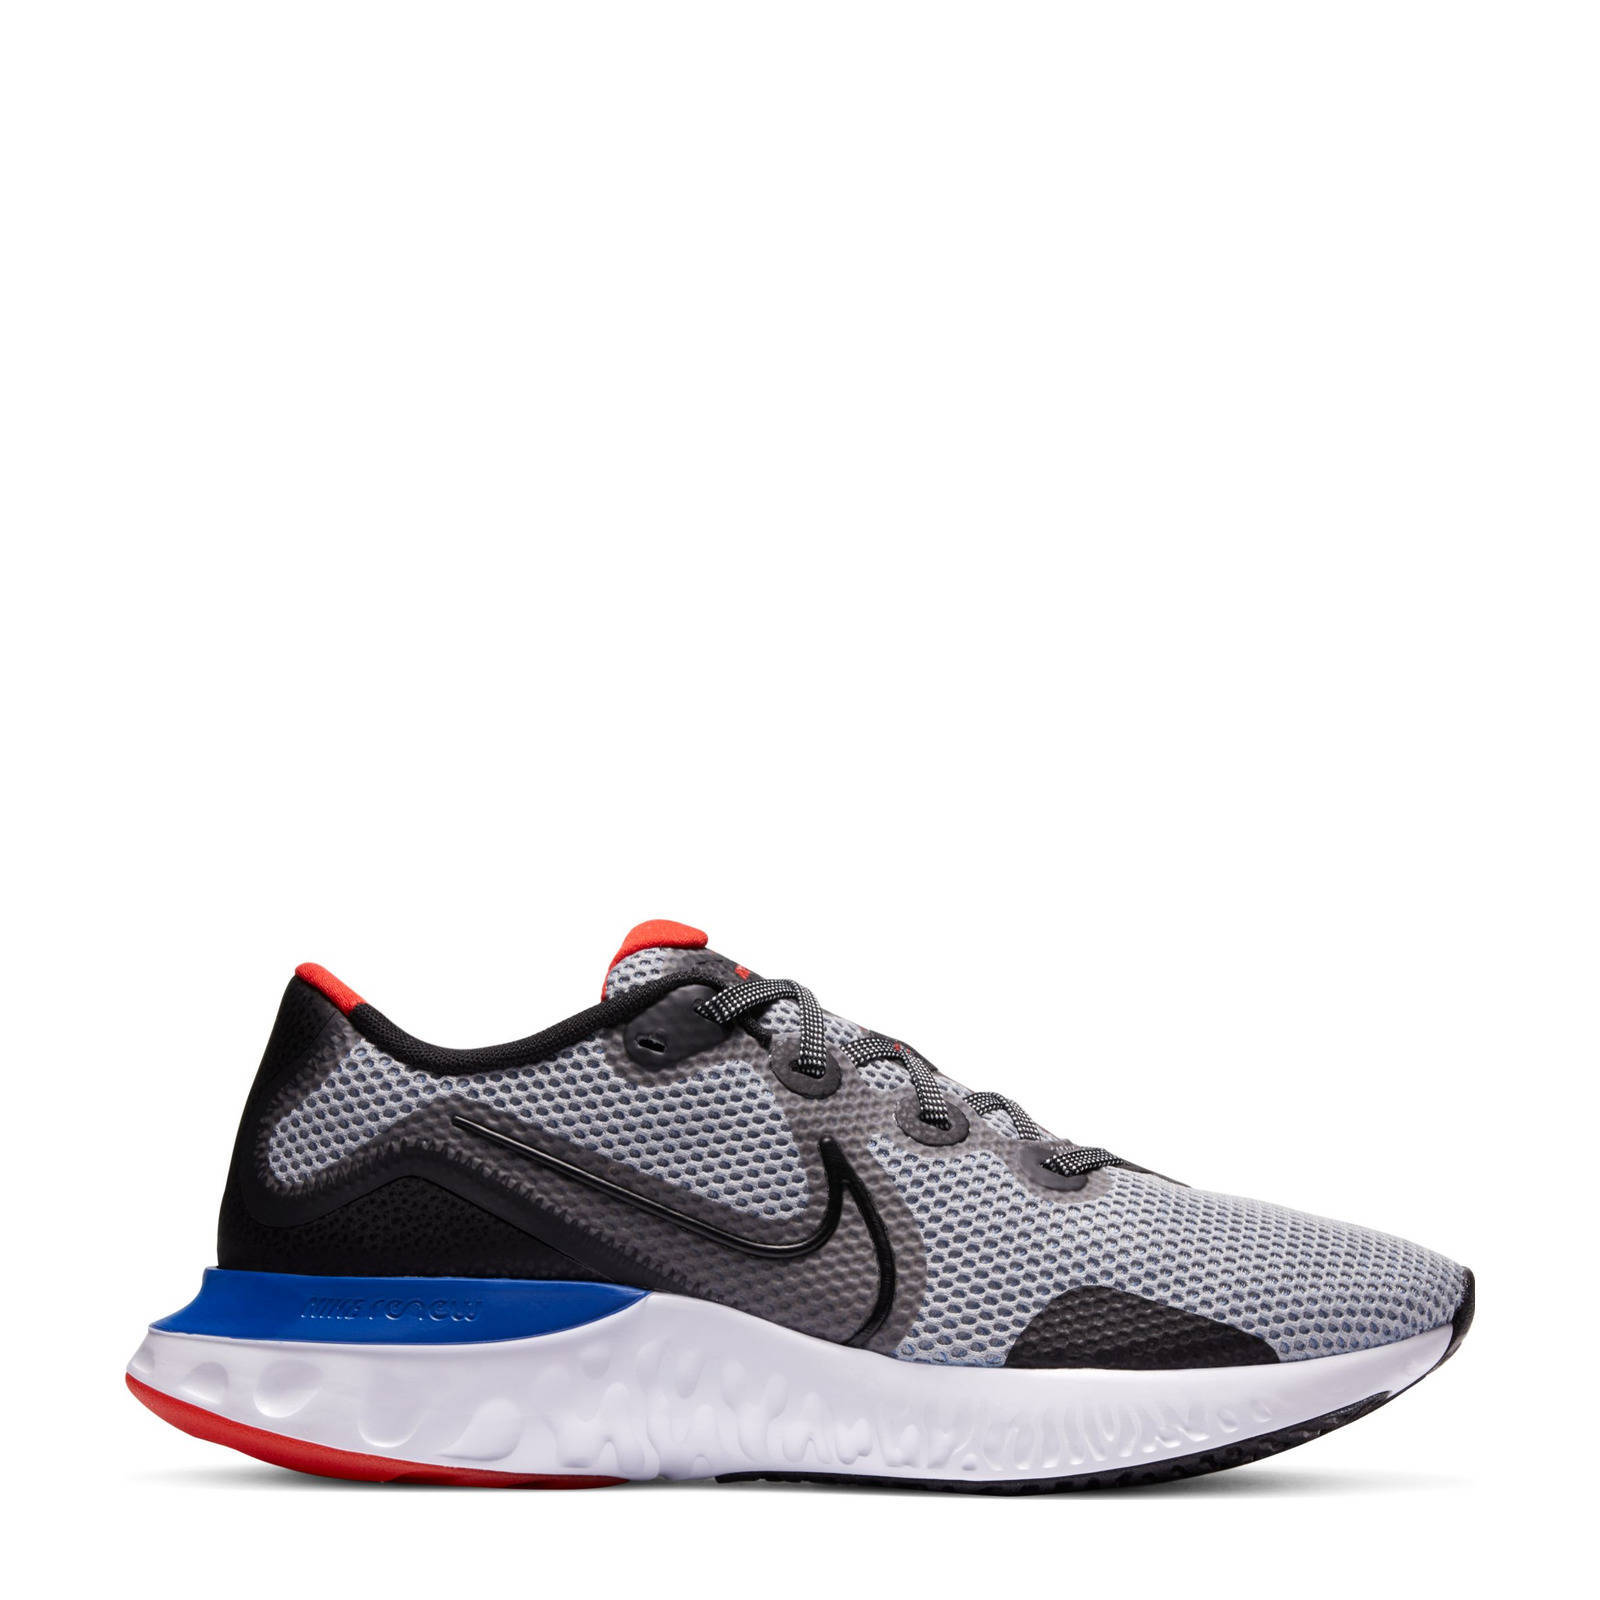 Nike Renew Run hardloopschoenen grijs/zwart/blauw | wehkamp